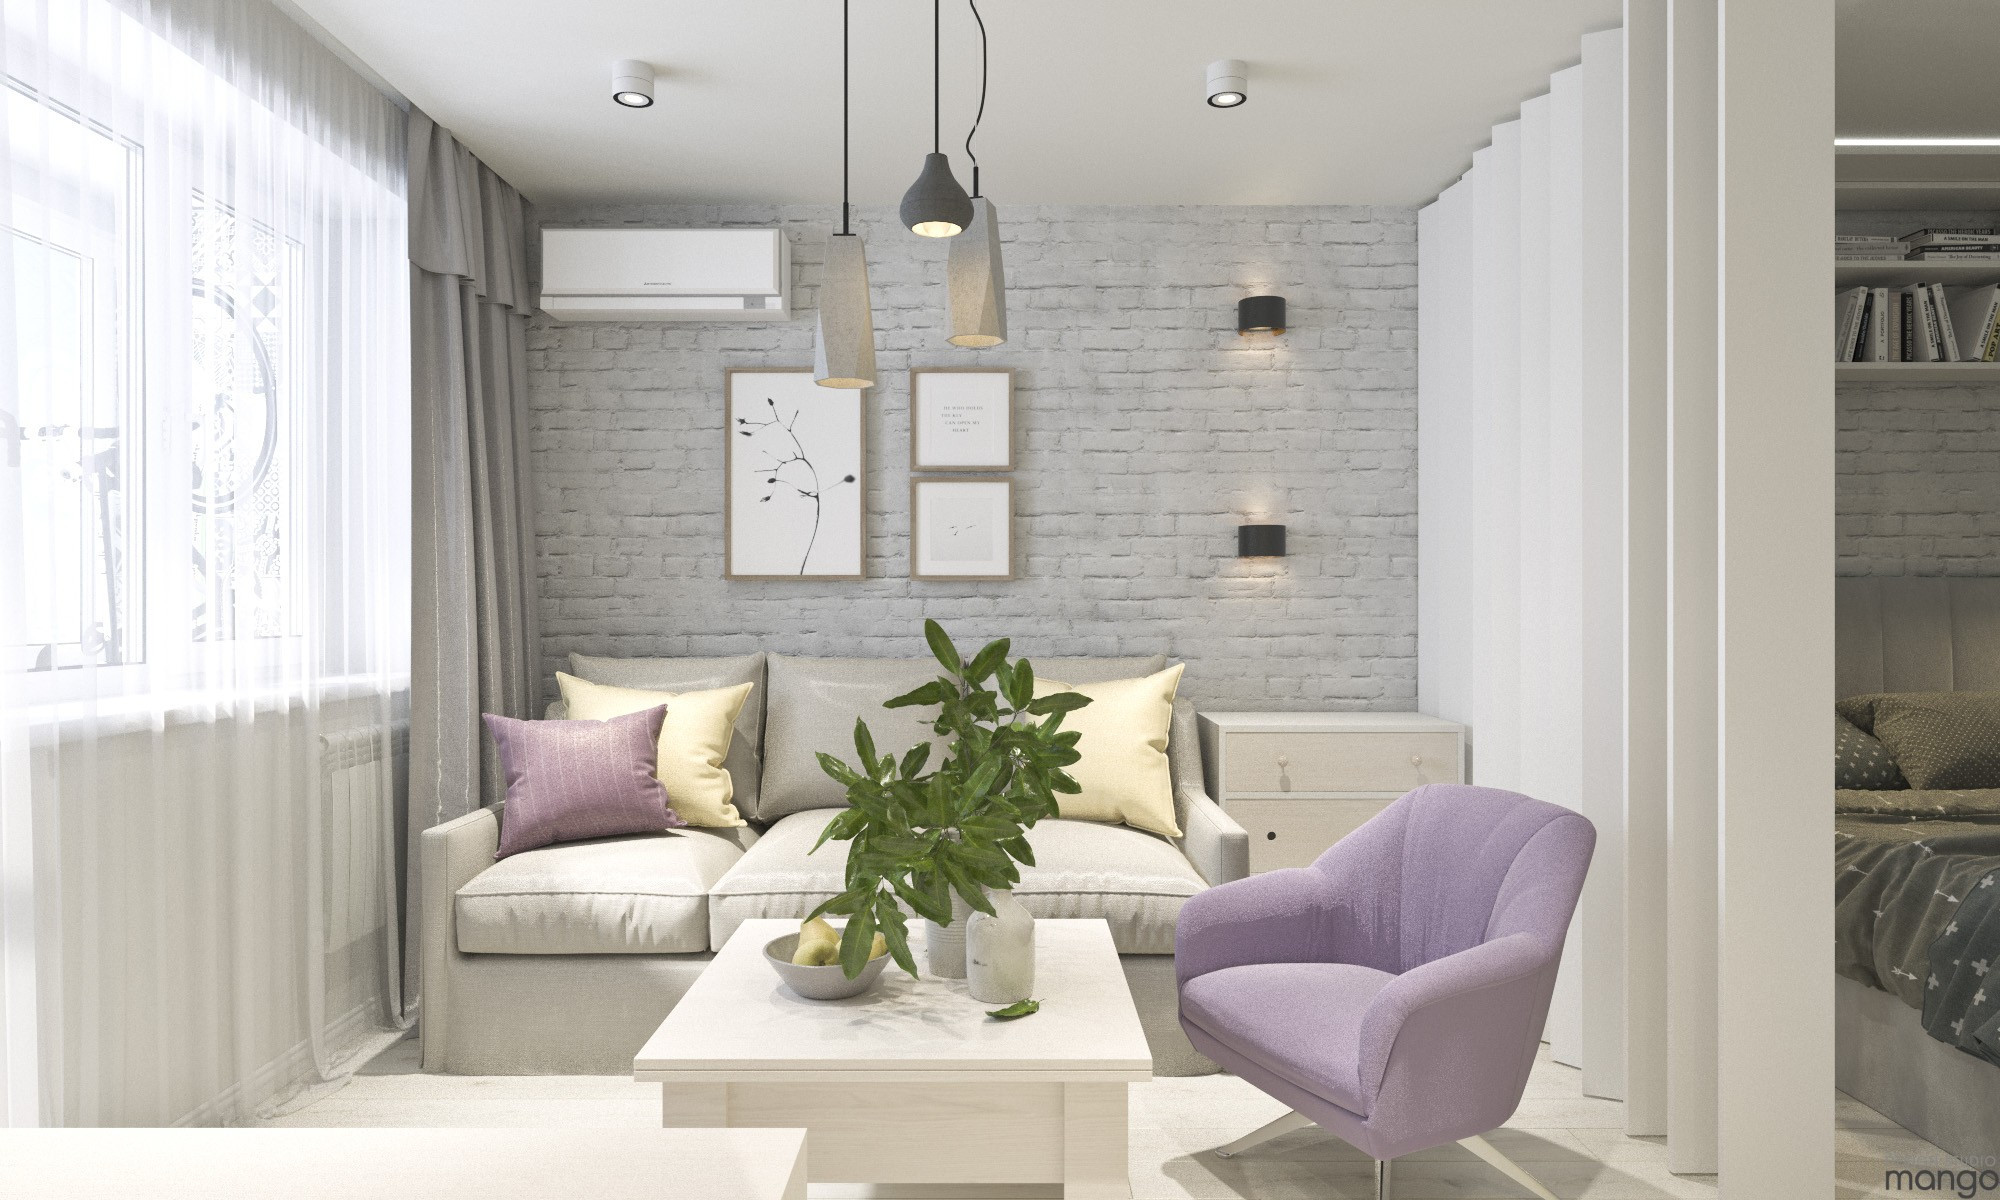 Minimalist Living Room Ideas
 Types of 3 Small Living Room Designs bined Between